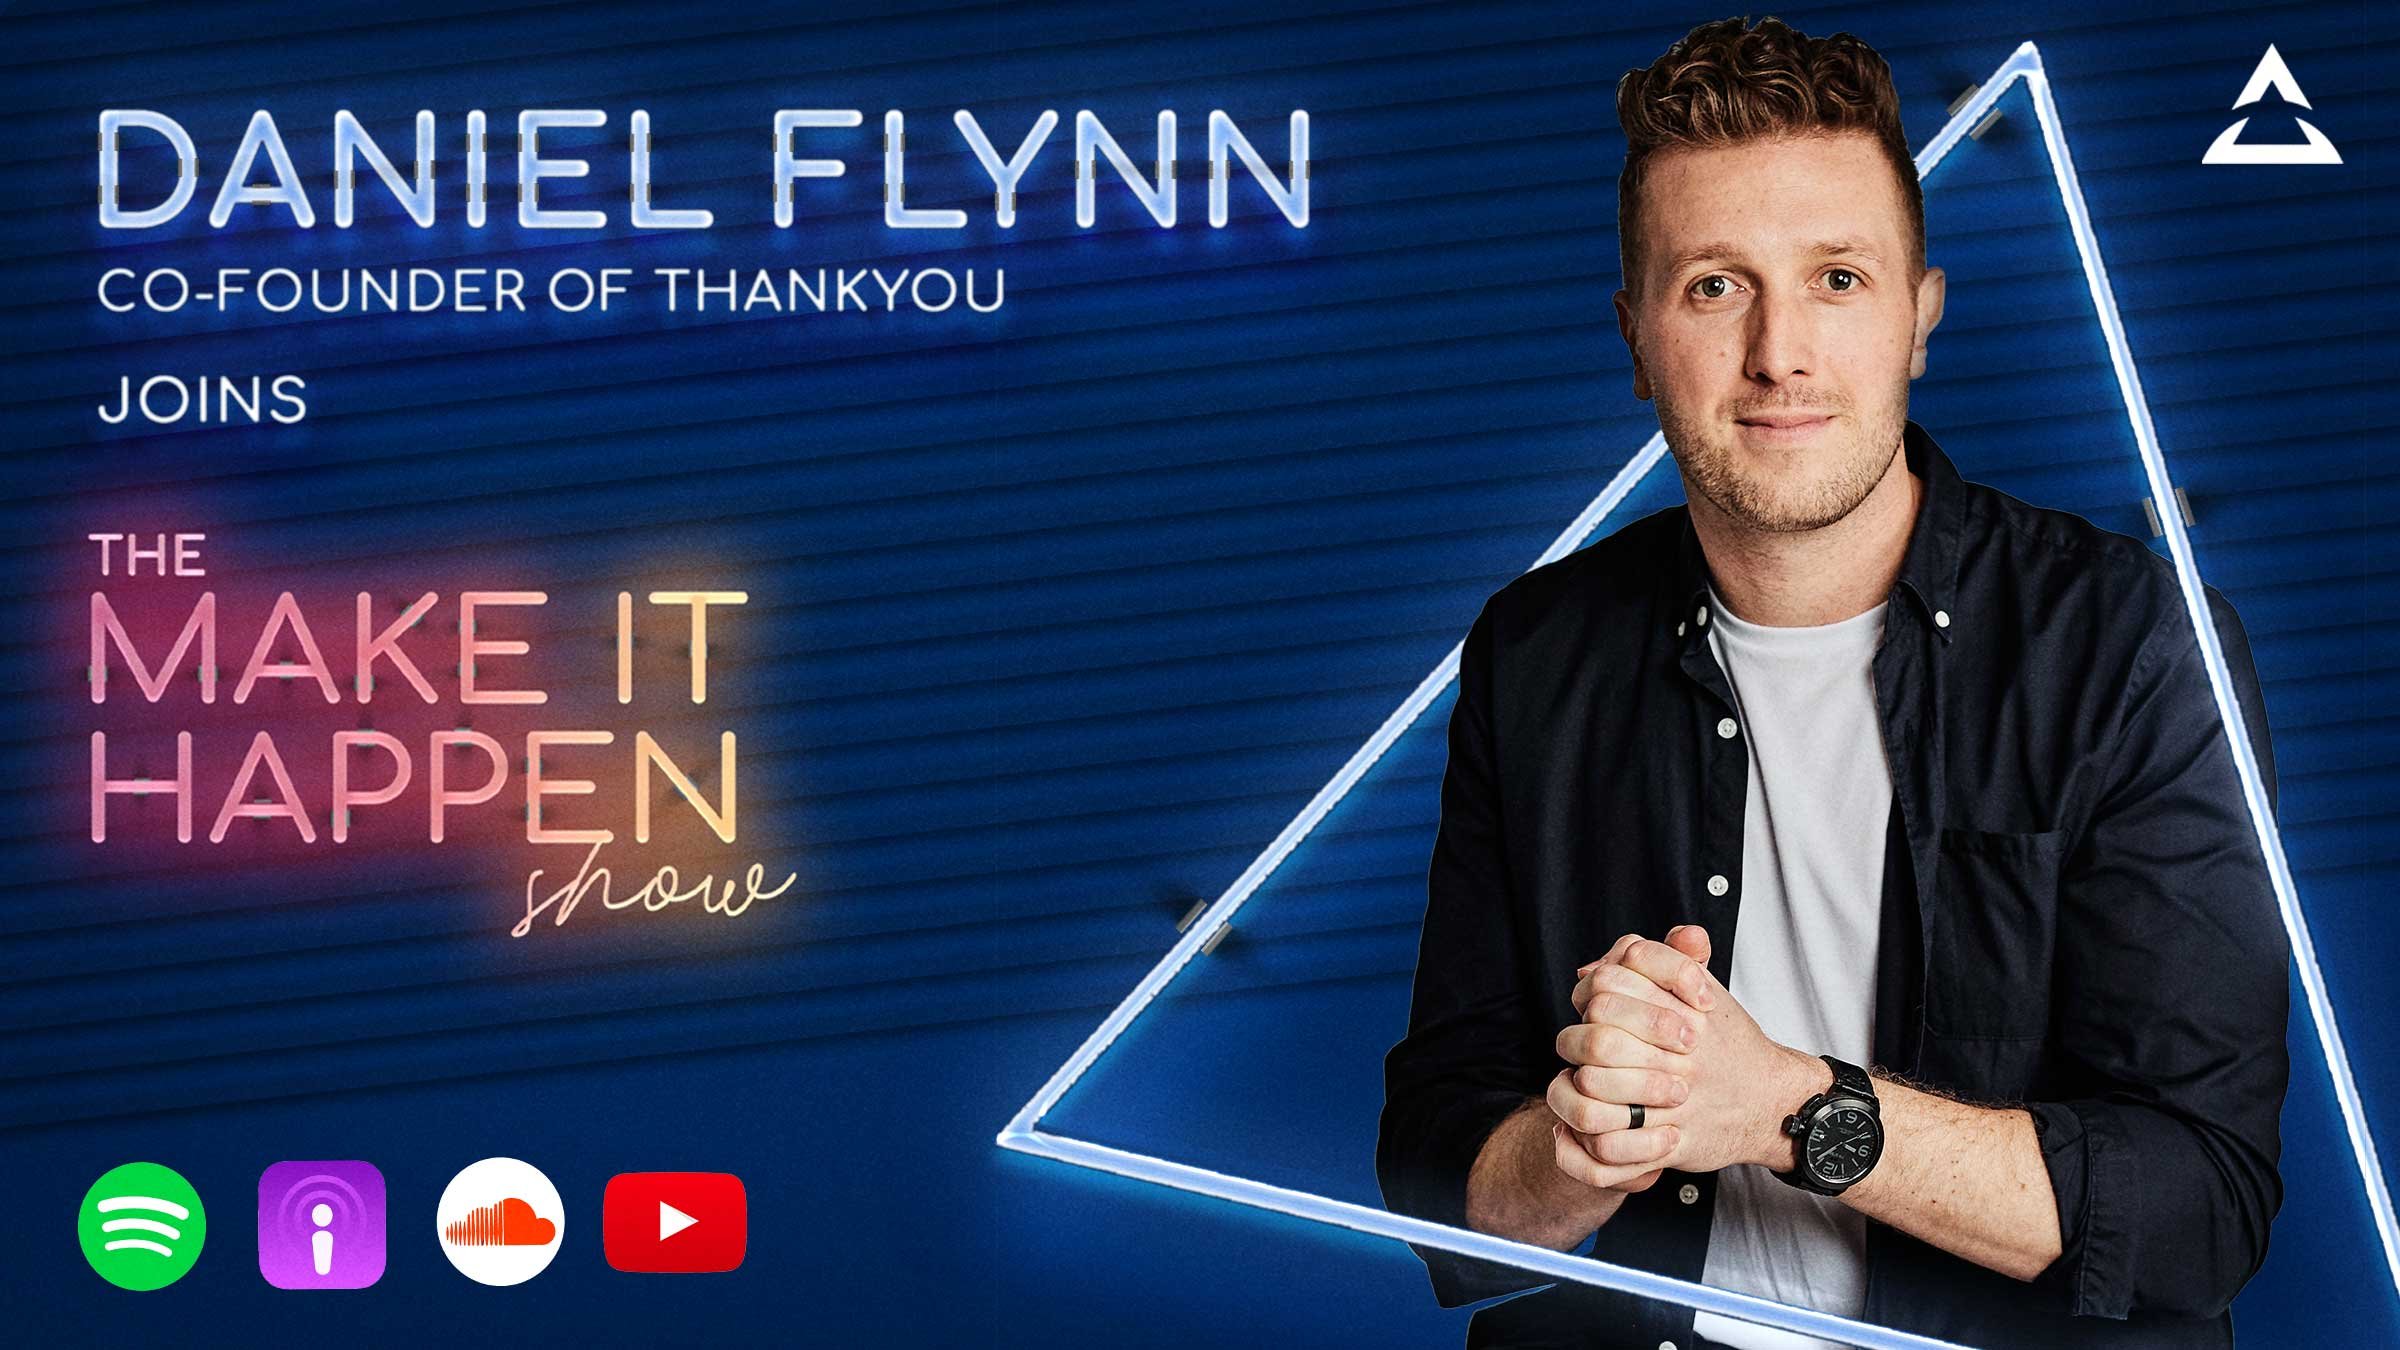 Daniel Flynn, Co-Founder of Thankyou joins The Make It Happen Show